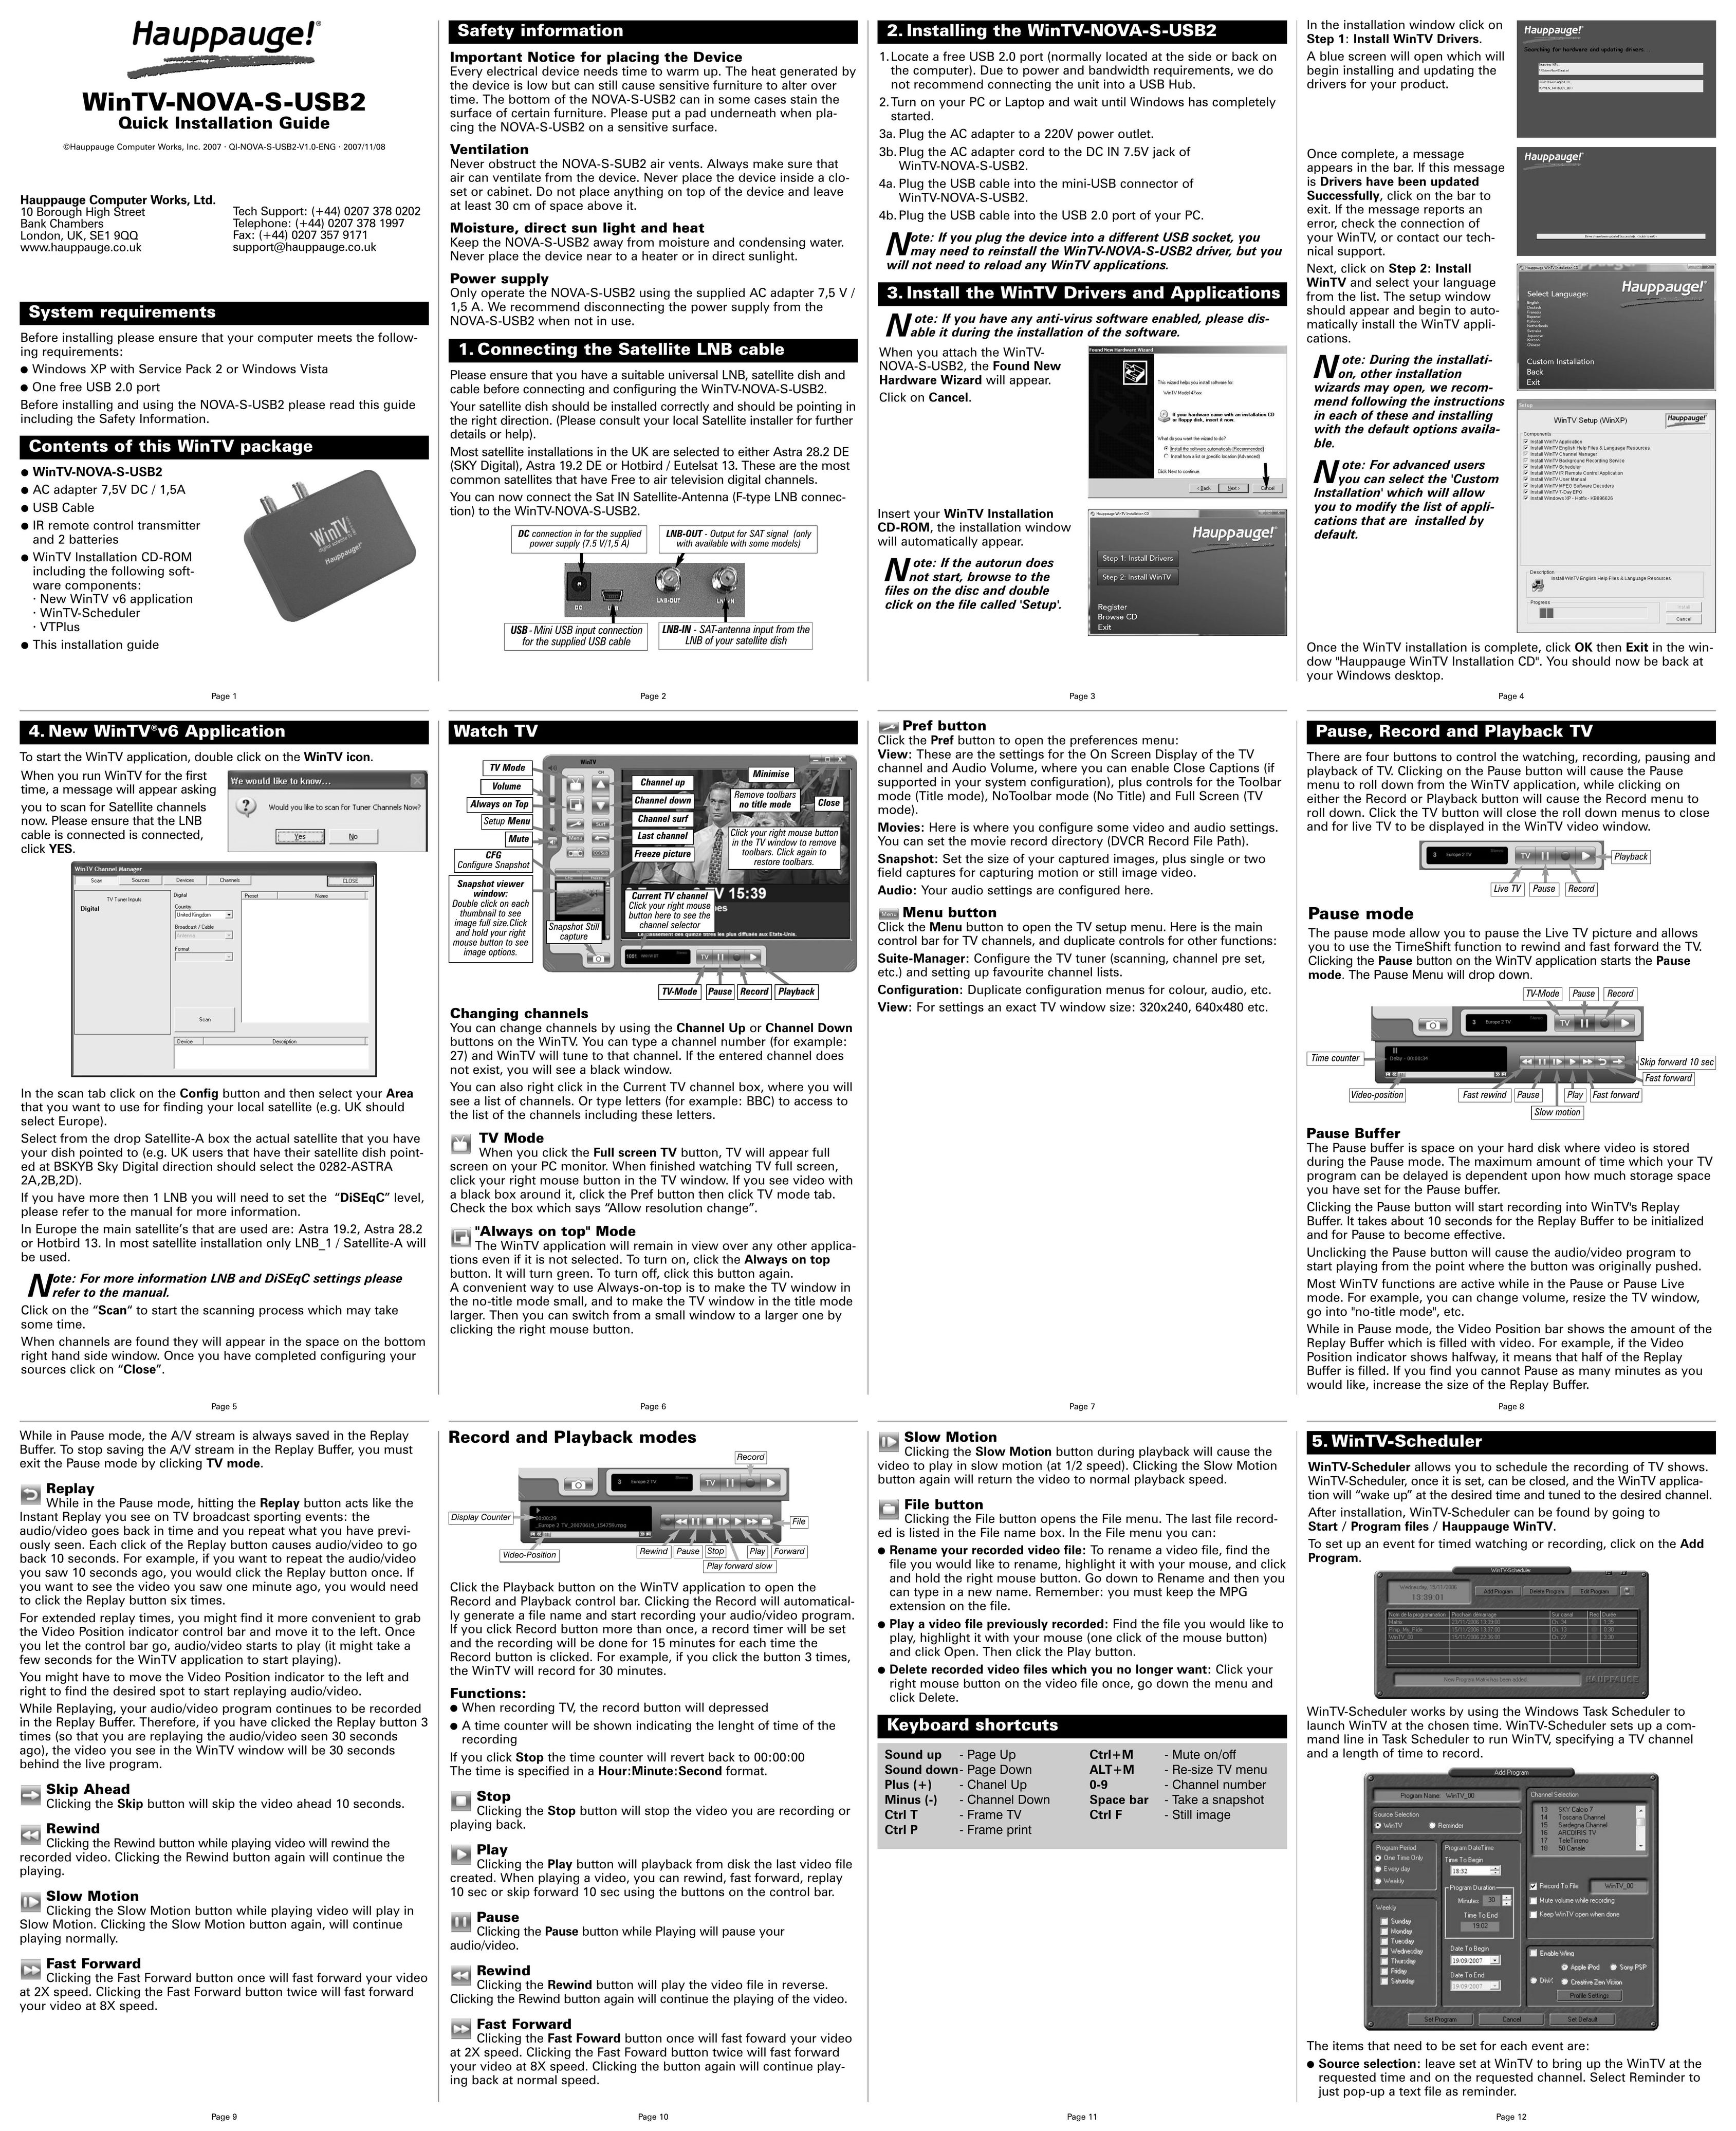 Hauppauge WinTV-NOVA-S-USB2 Car Satellite TV System User Manual